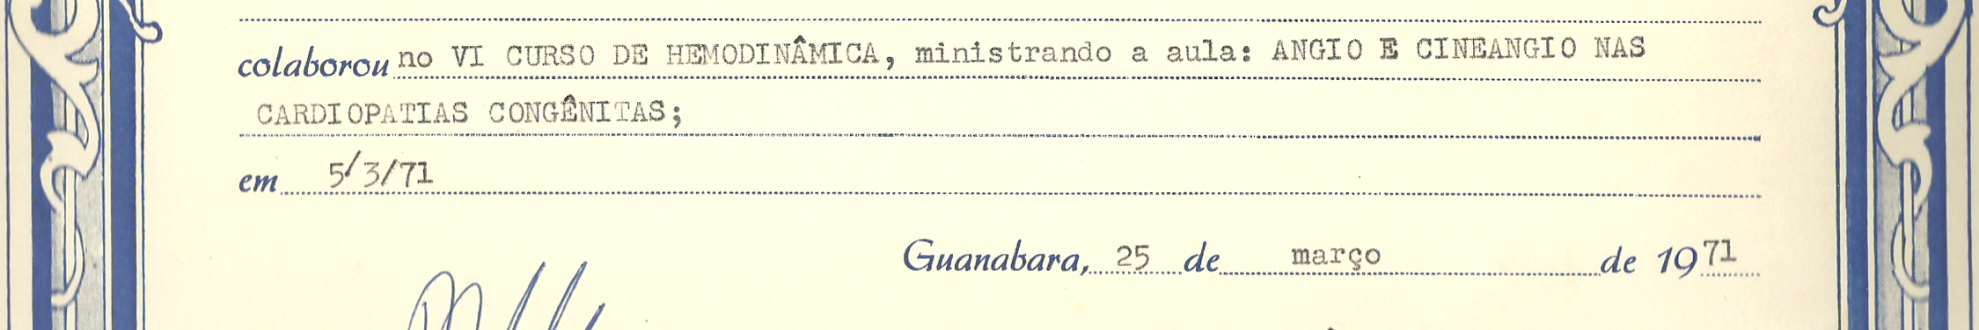 1971:Certificado - Estado da Guanabara Instituto Estadual de Cardiologia